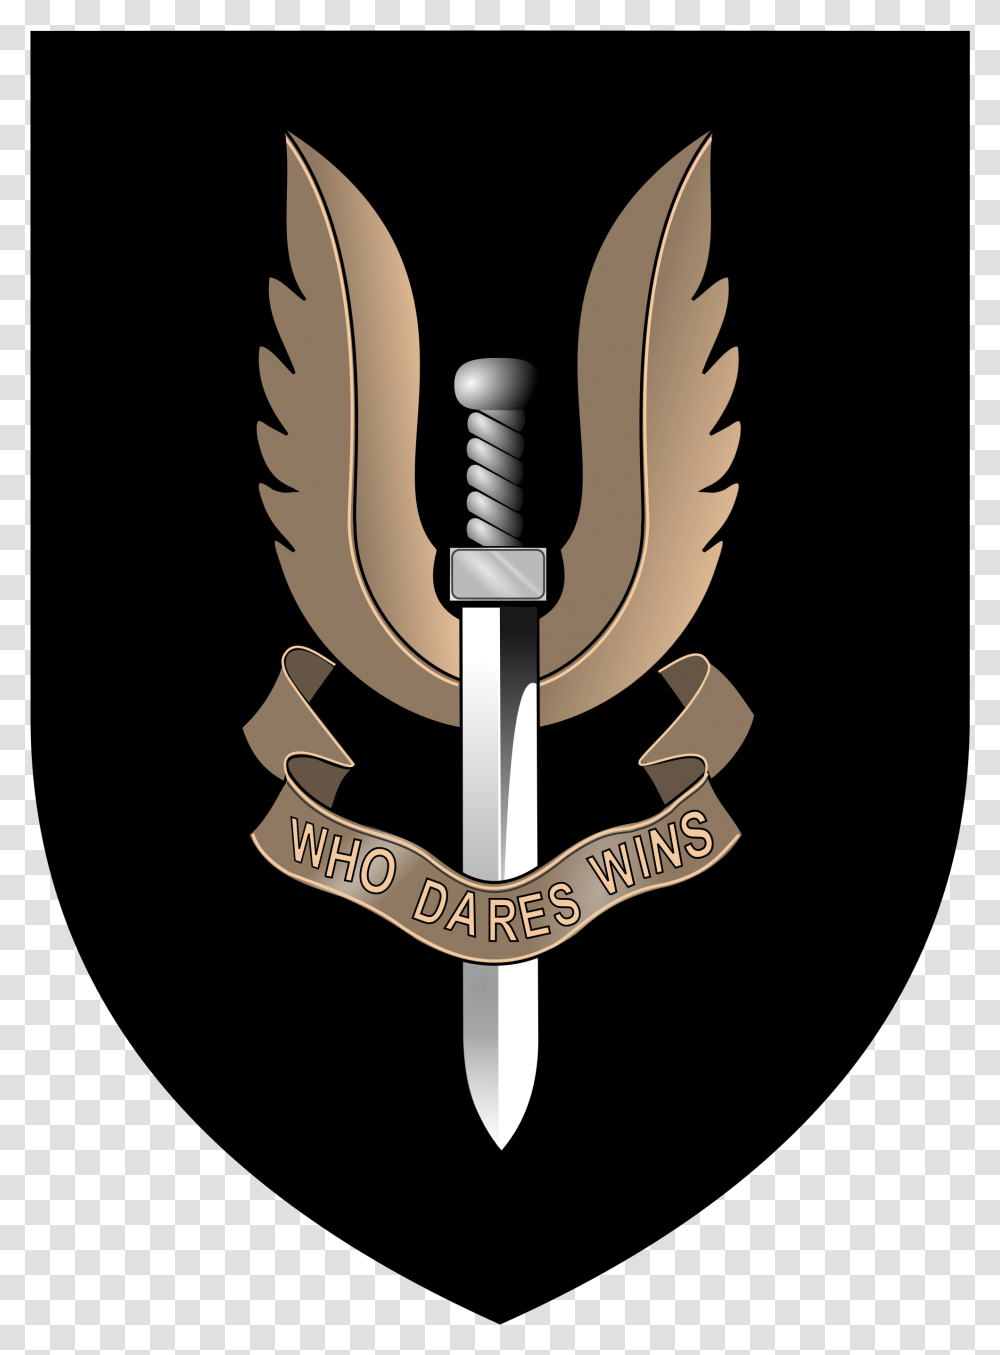 Hellsing Wiki Rainbow Six Siege Sas Logo, Weapon, Weaponry, Sword, Blade Transparent Png